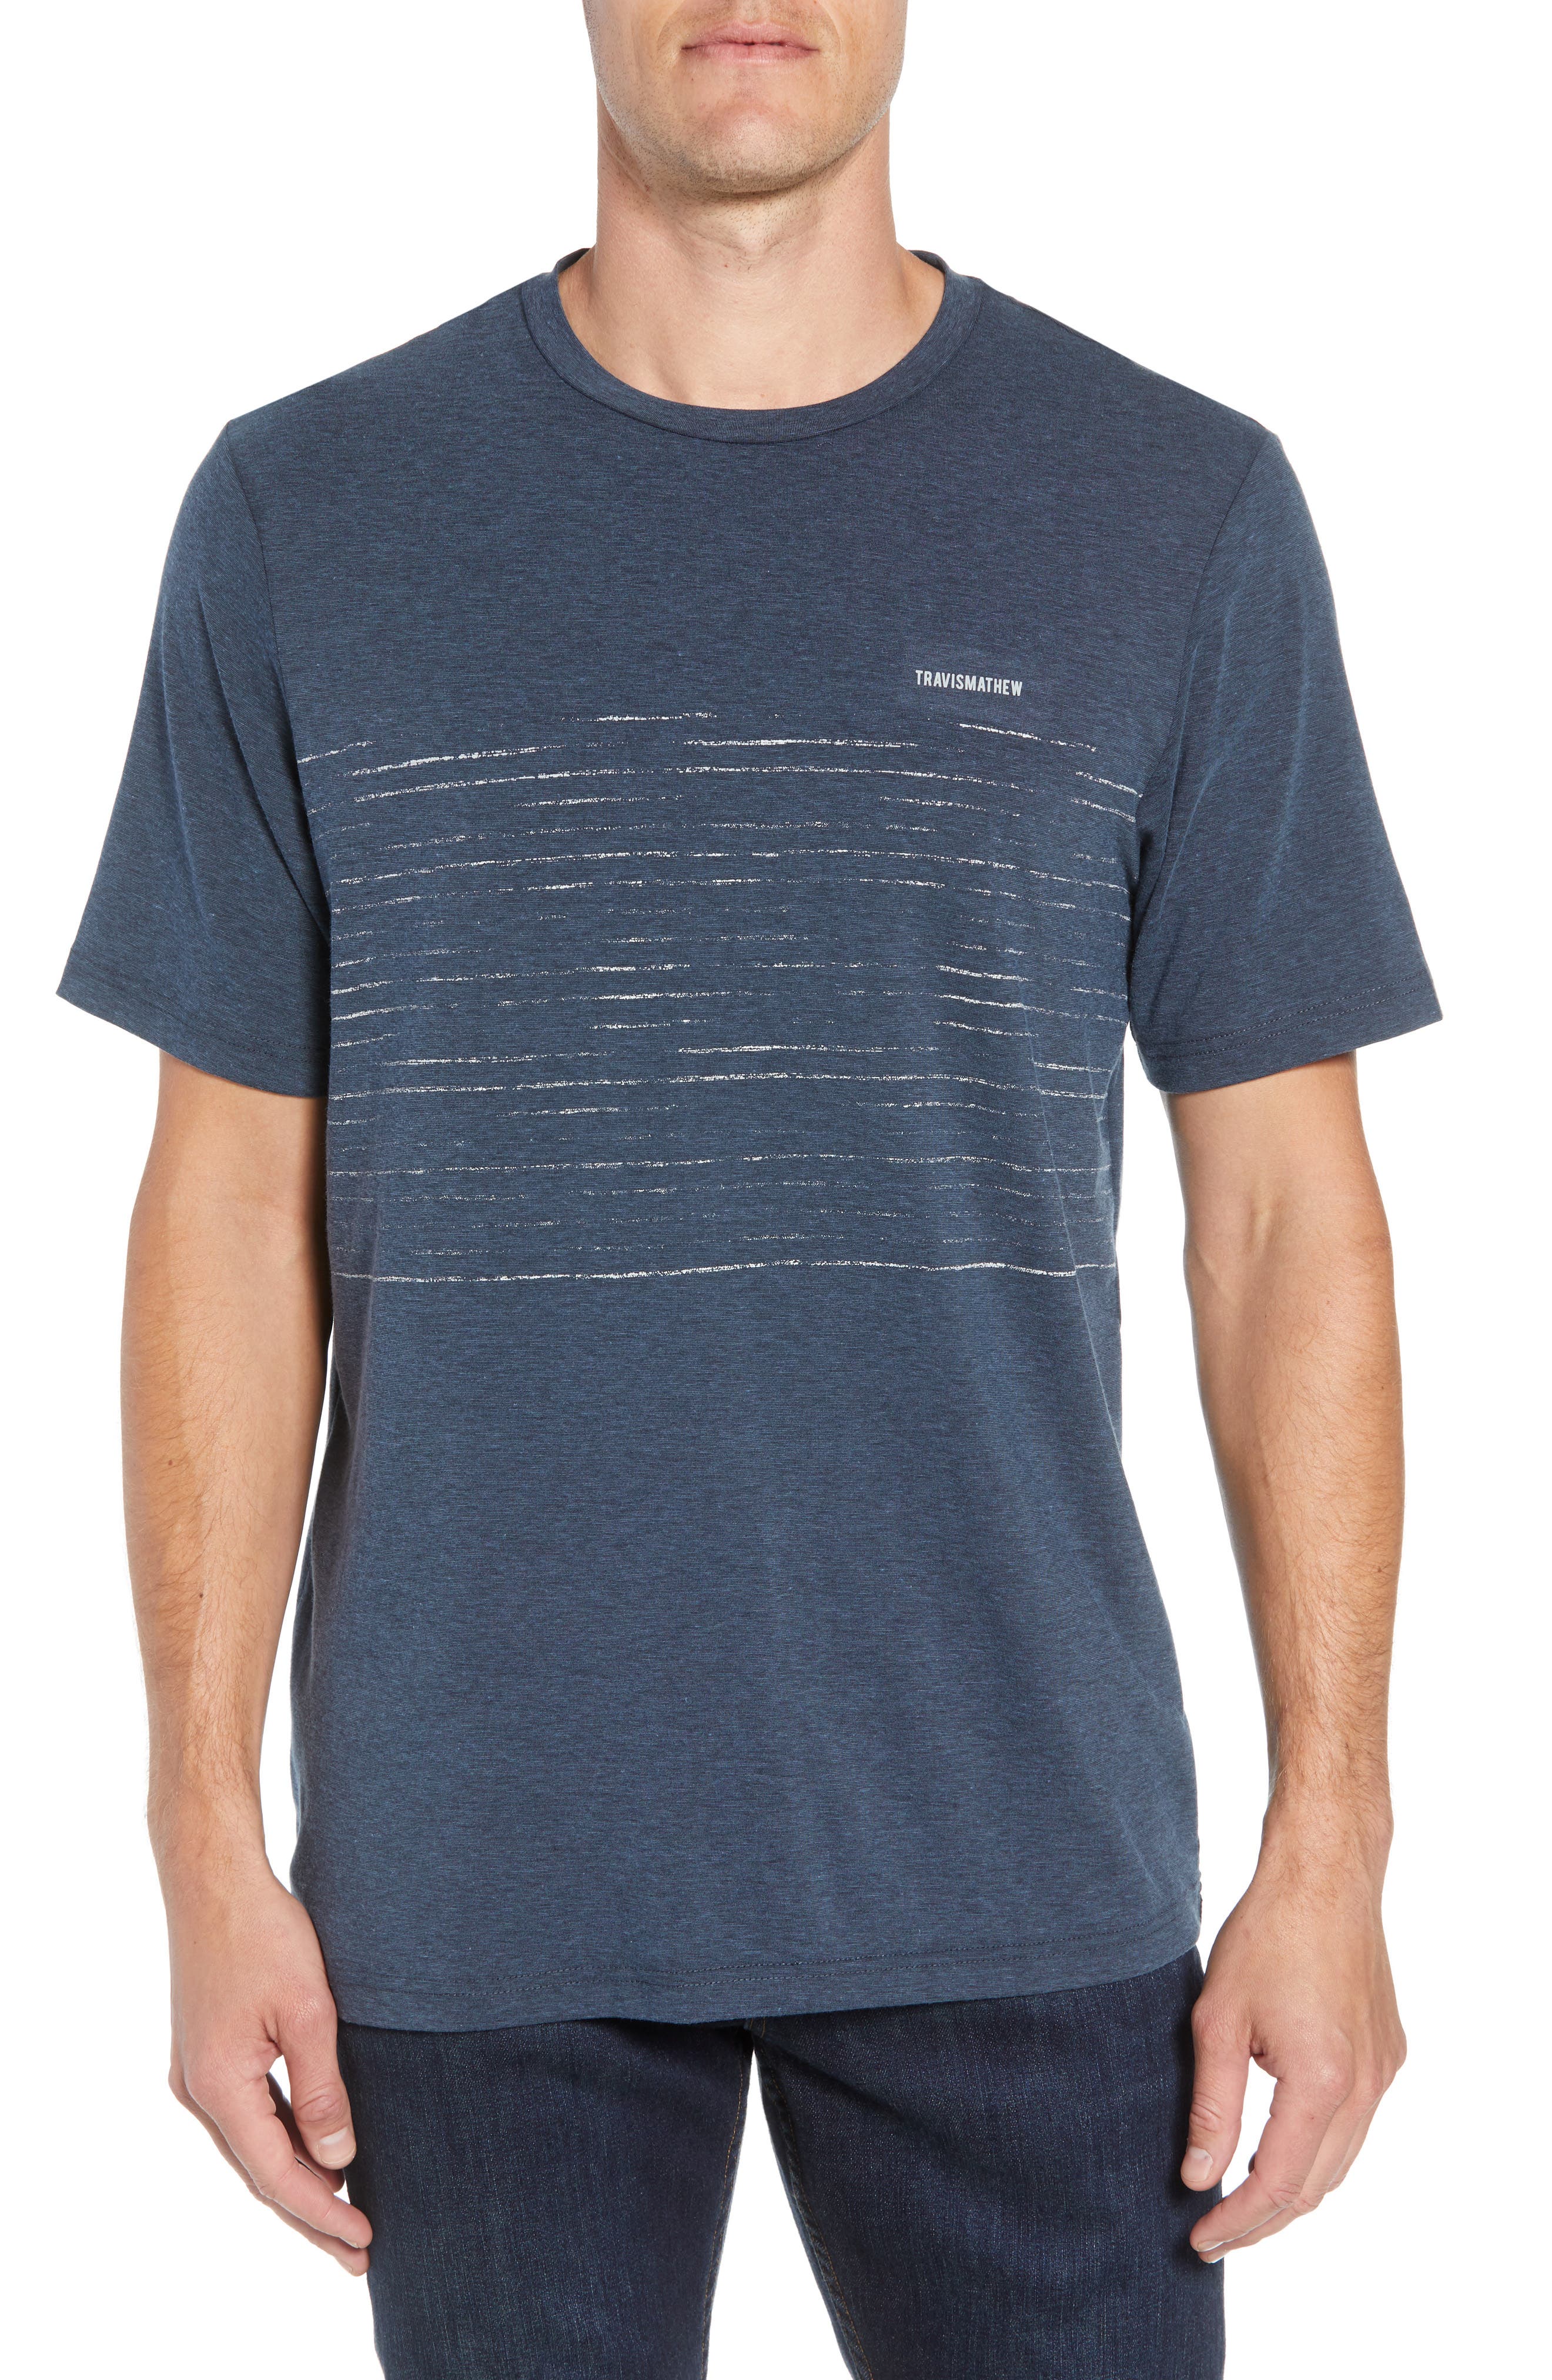 Travis Mathew Men's T-Shirts, stylish comfort clothing